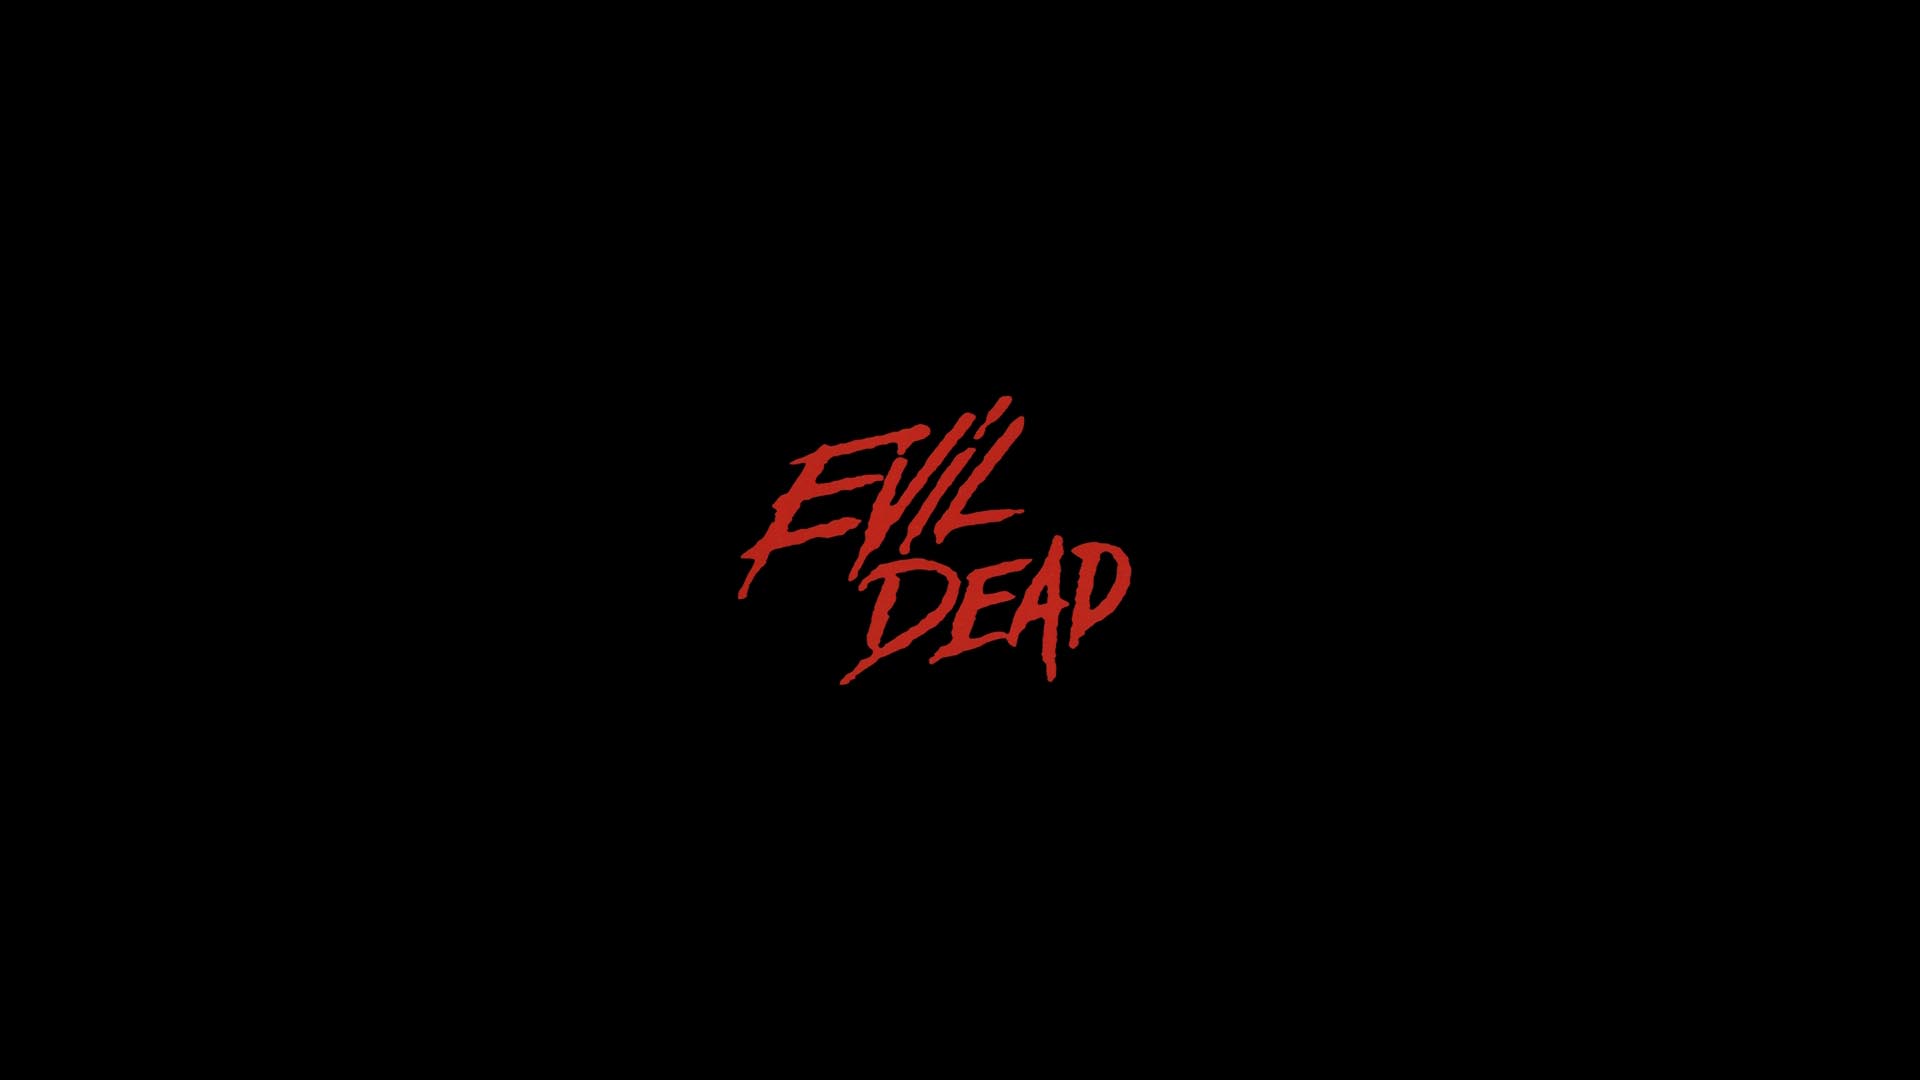 movie, evil dead (1981)